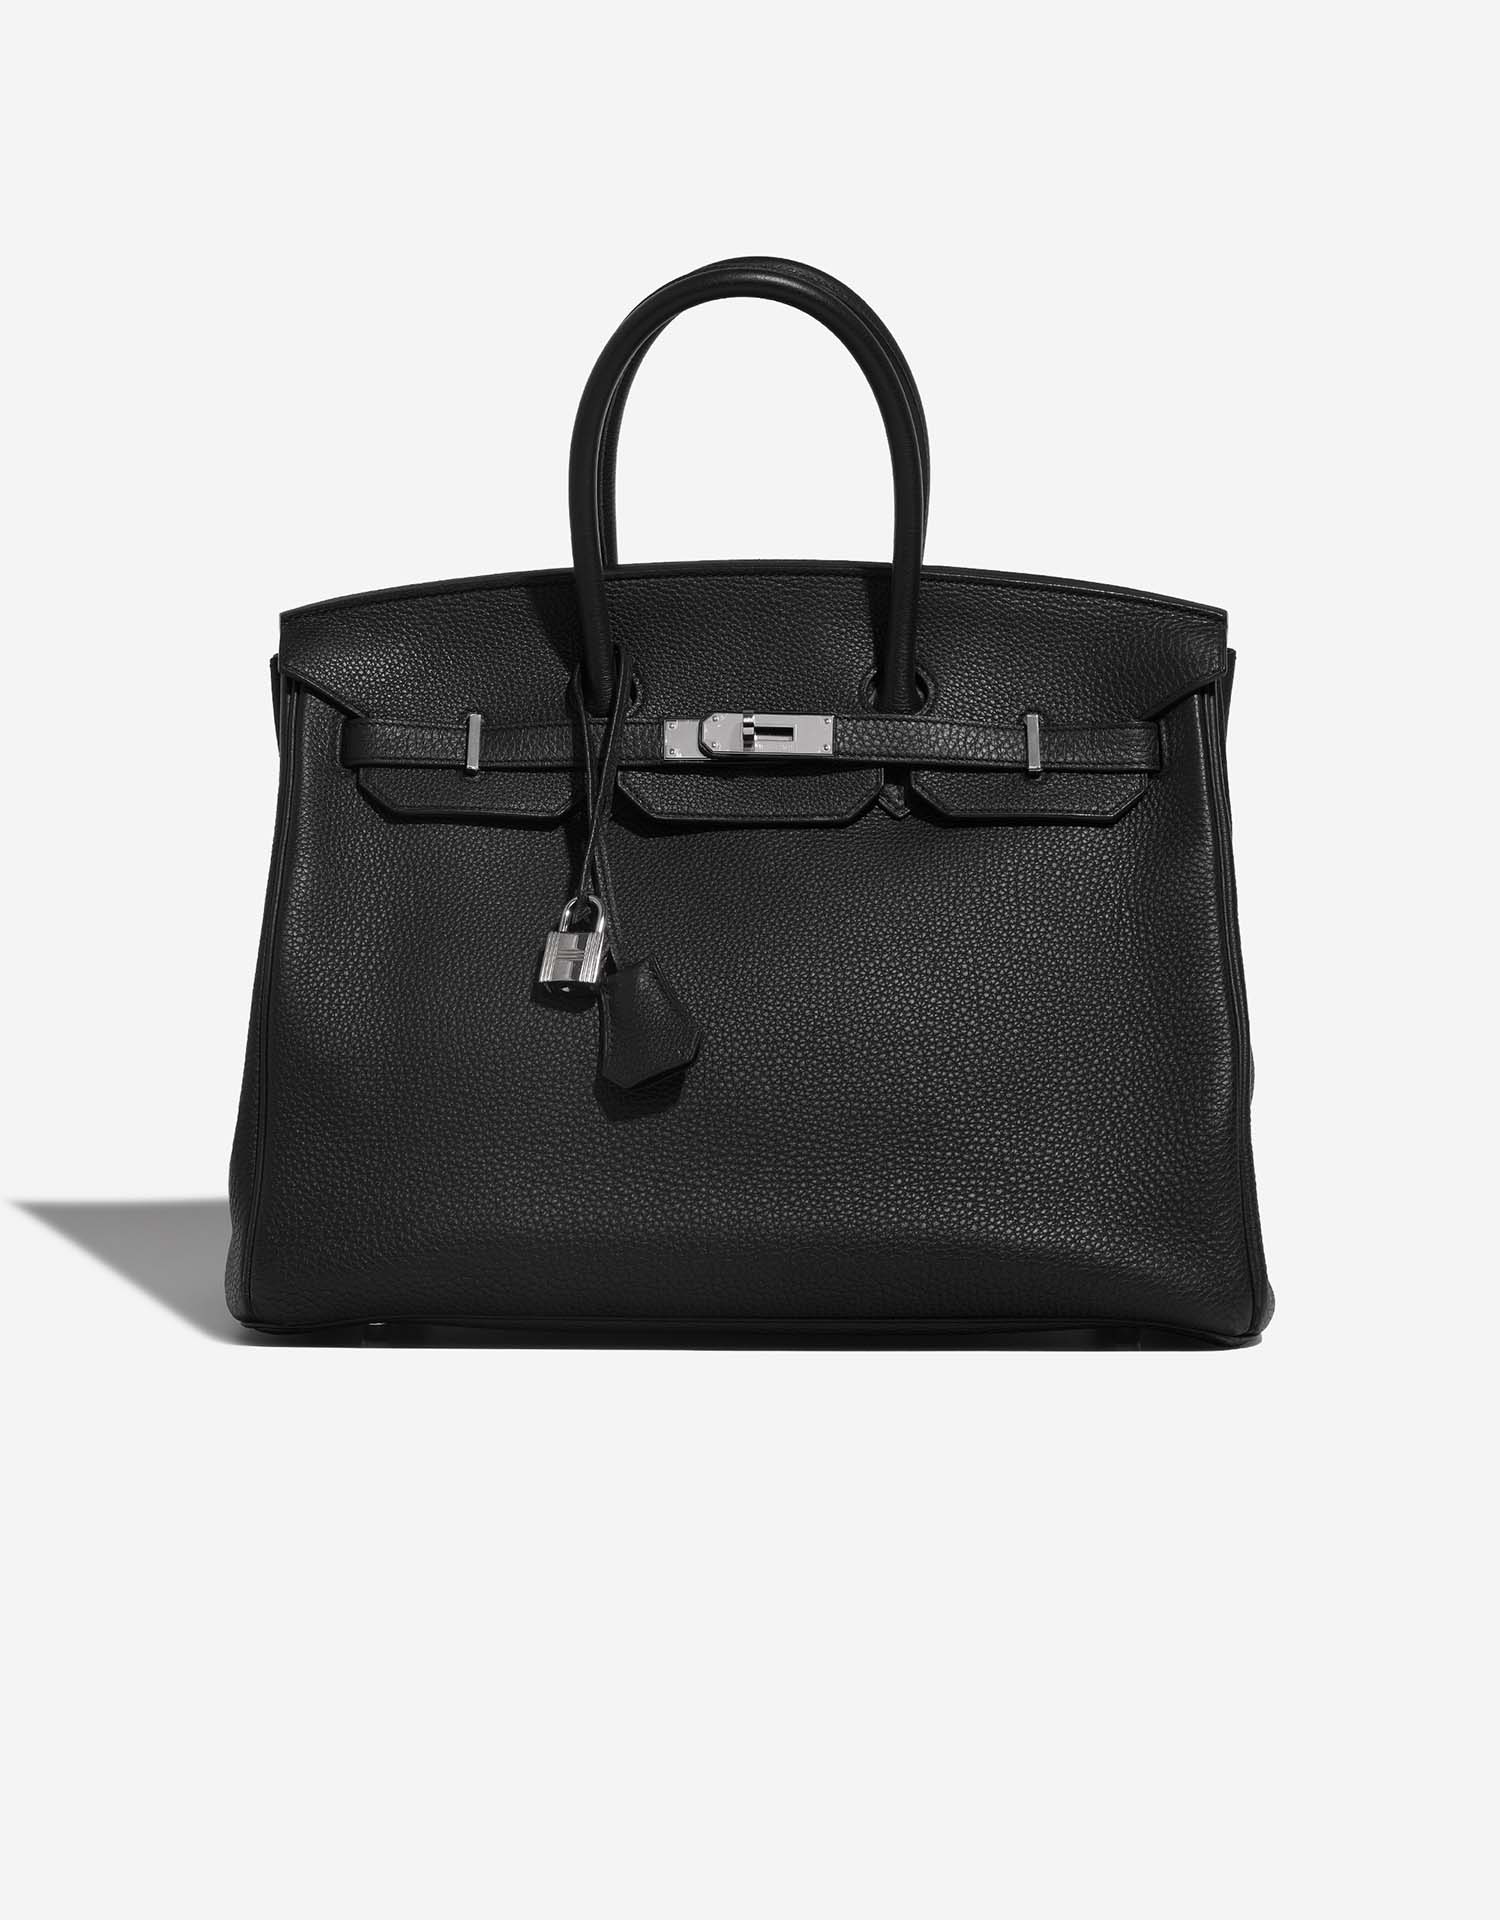 Hermès Birkin 35 Togo Black | SACLÀB